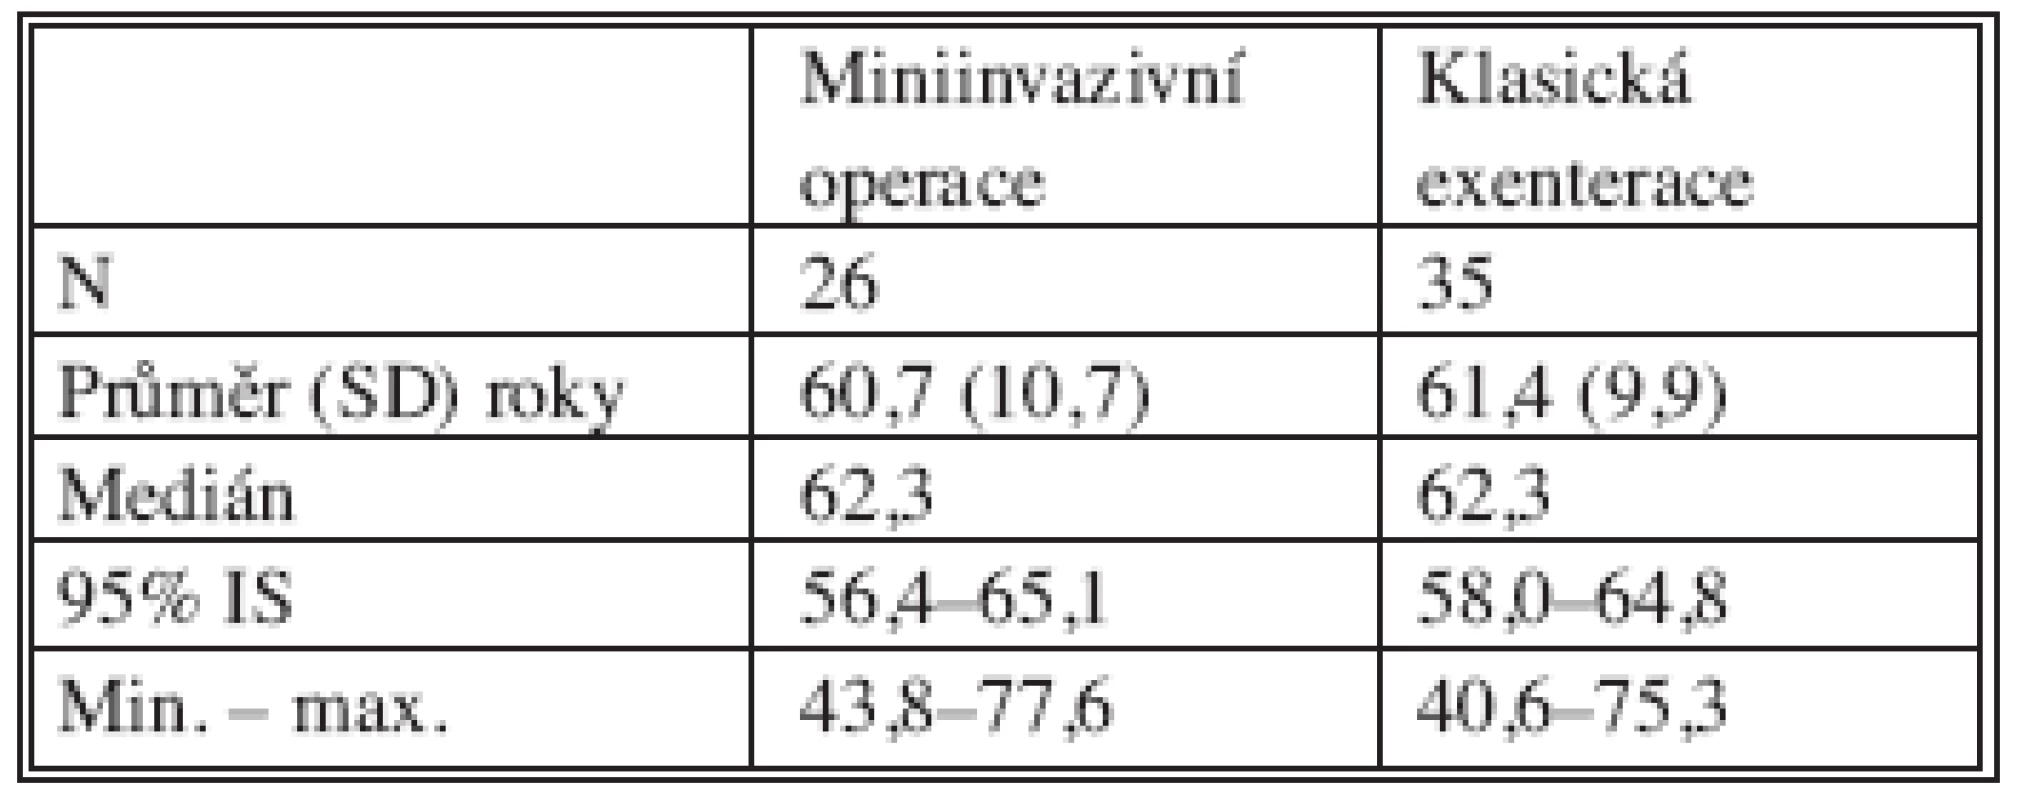 Průměrný věk operovaných pacientek
Tab. 1. Mean age of the operated female patients